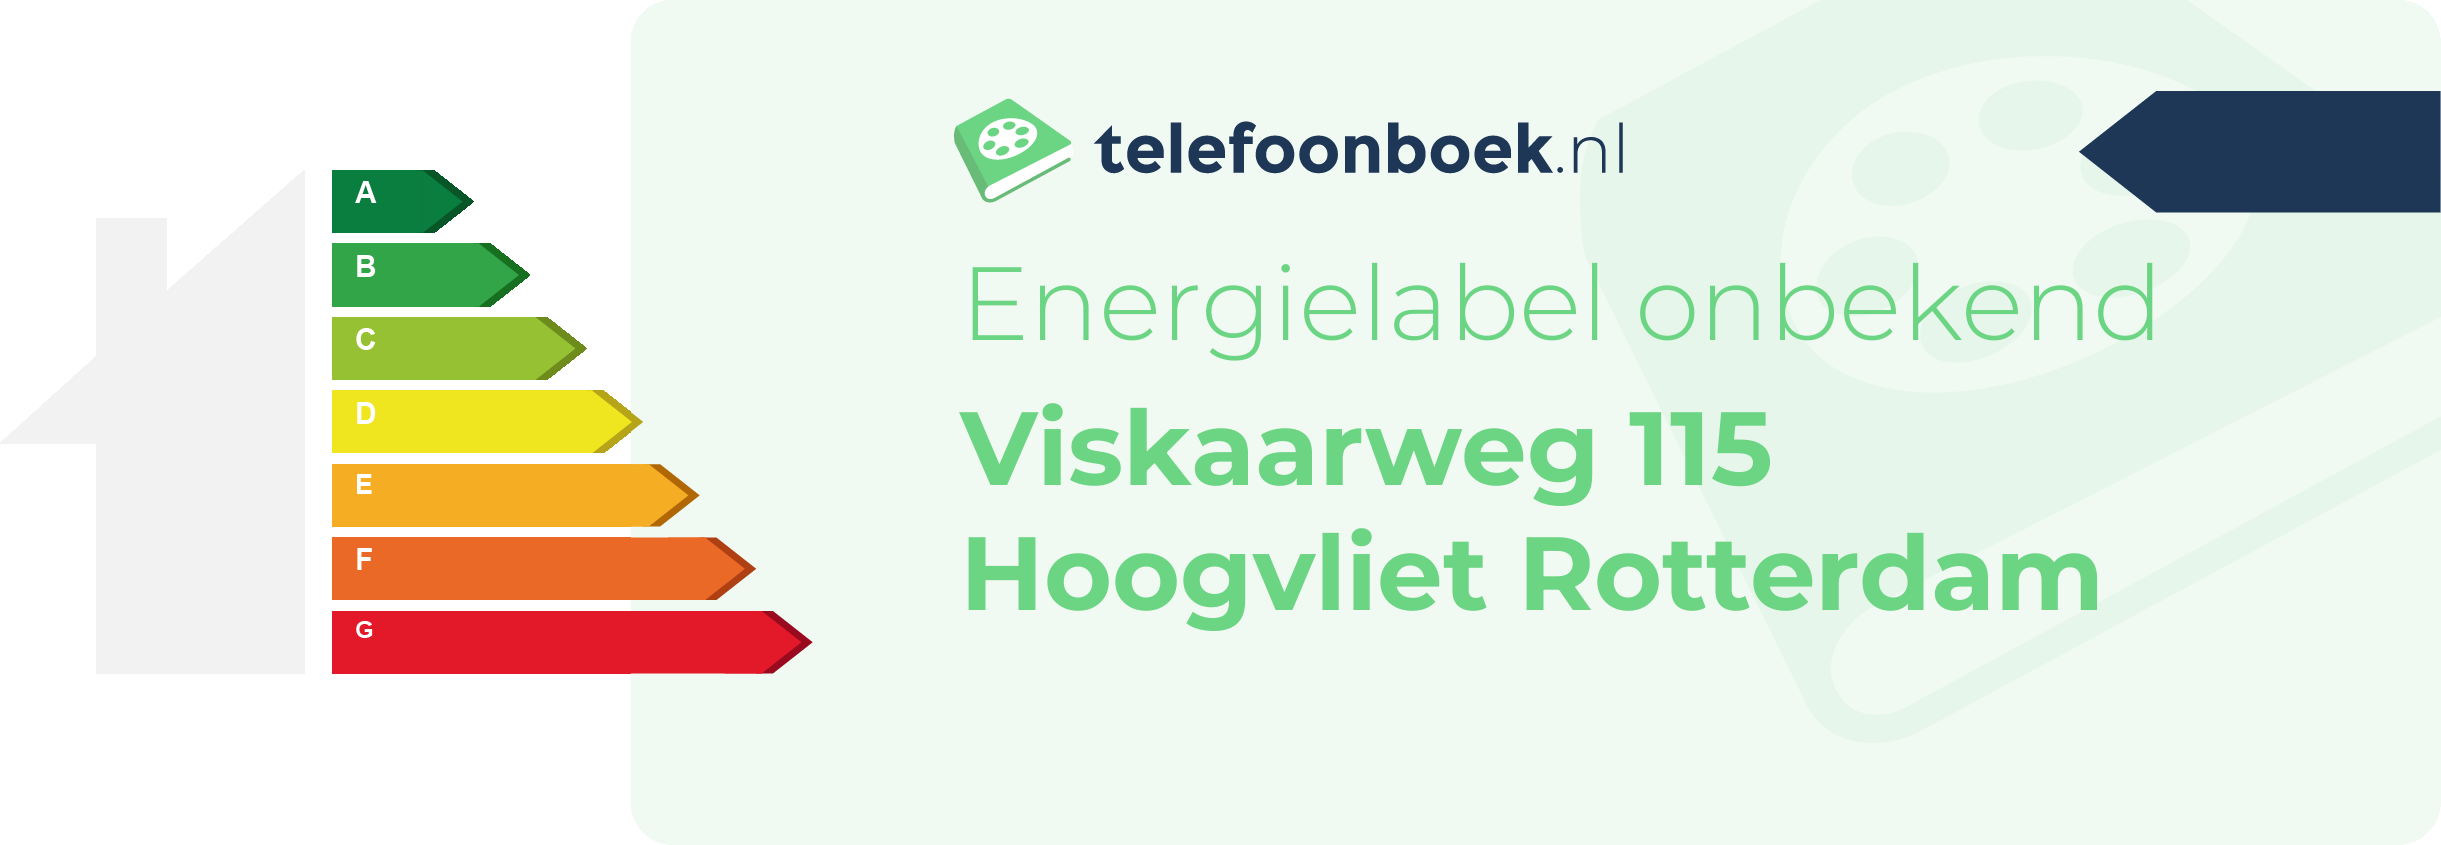 Energielabel Viskaarweg 115 Hoogvliet Rotterdam